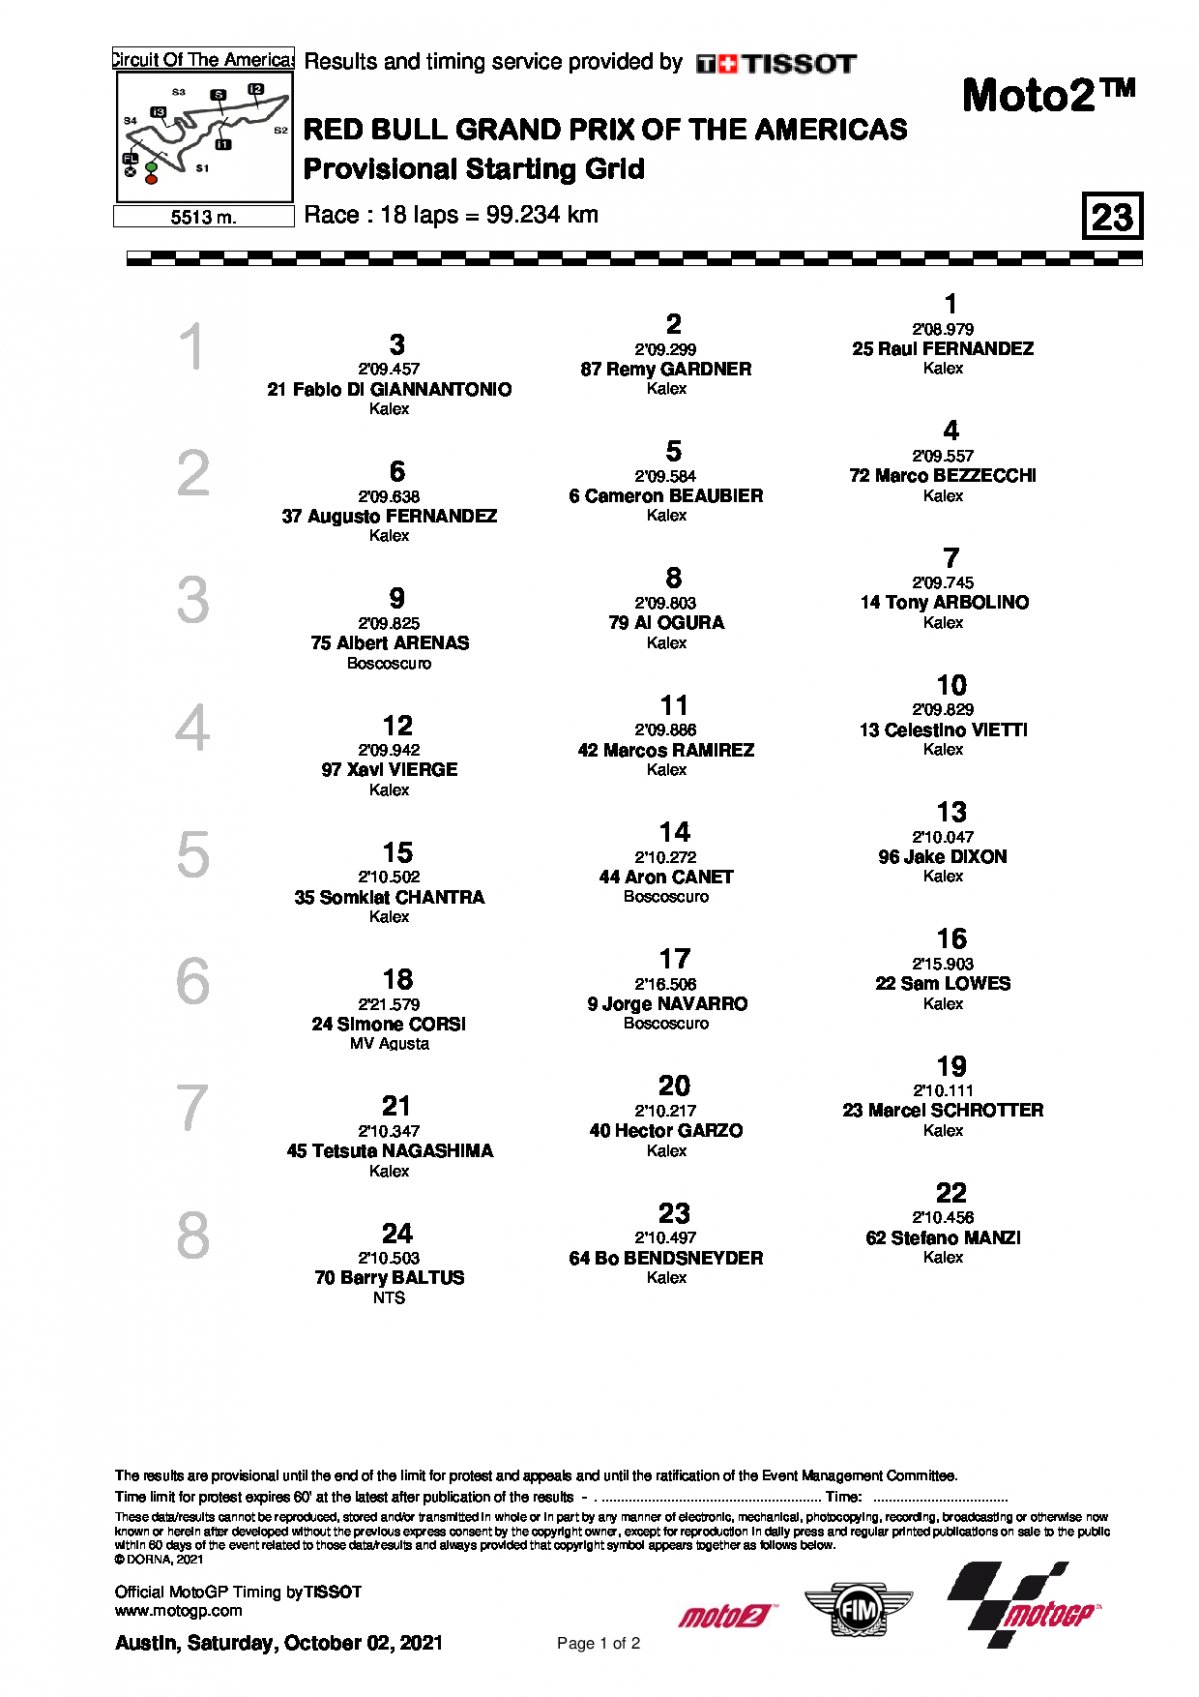 Стартовая решетка Гран-При Америк, Moto2 (3/10/2021)